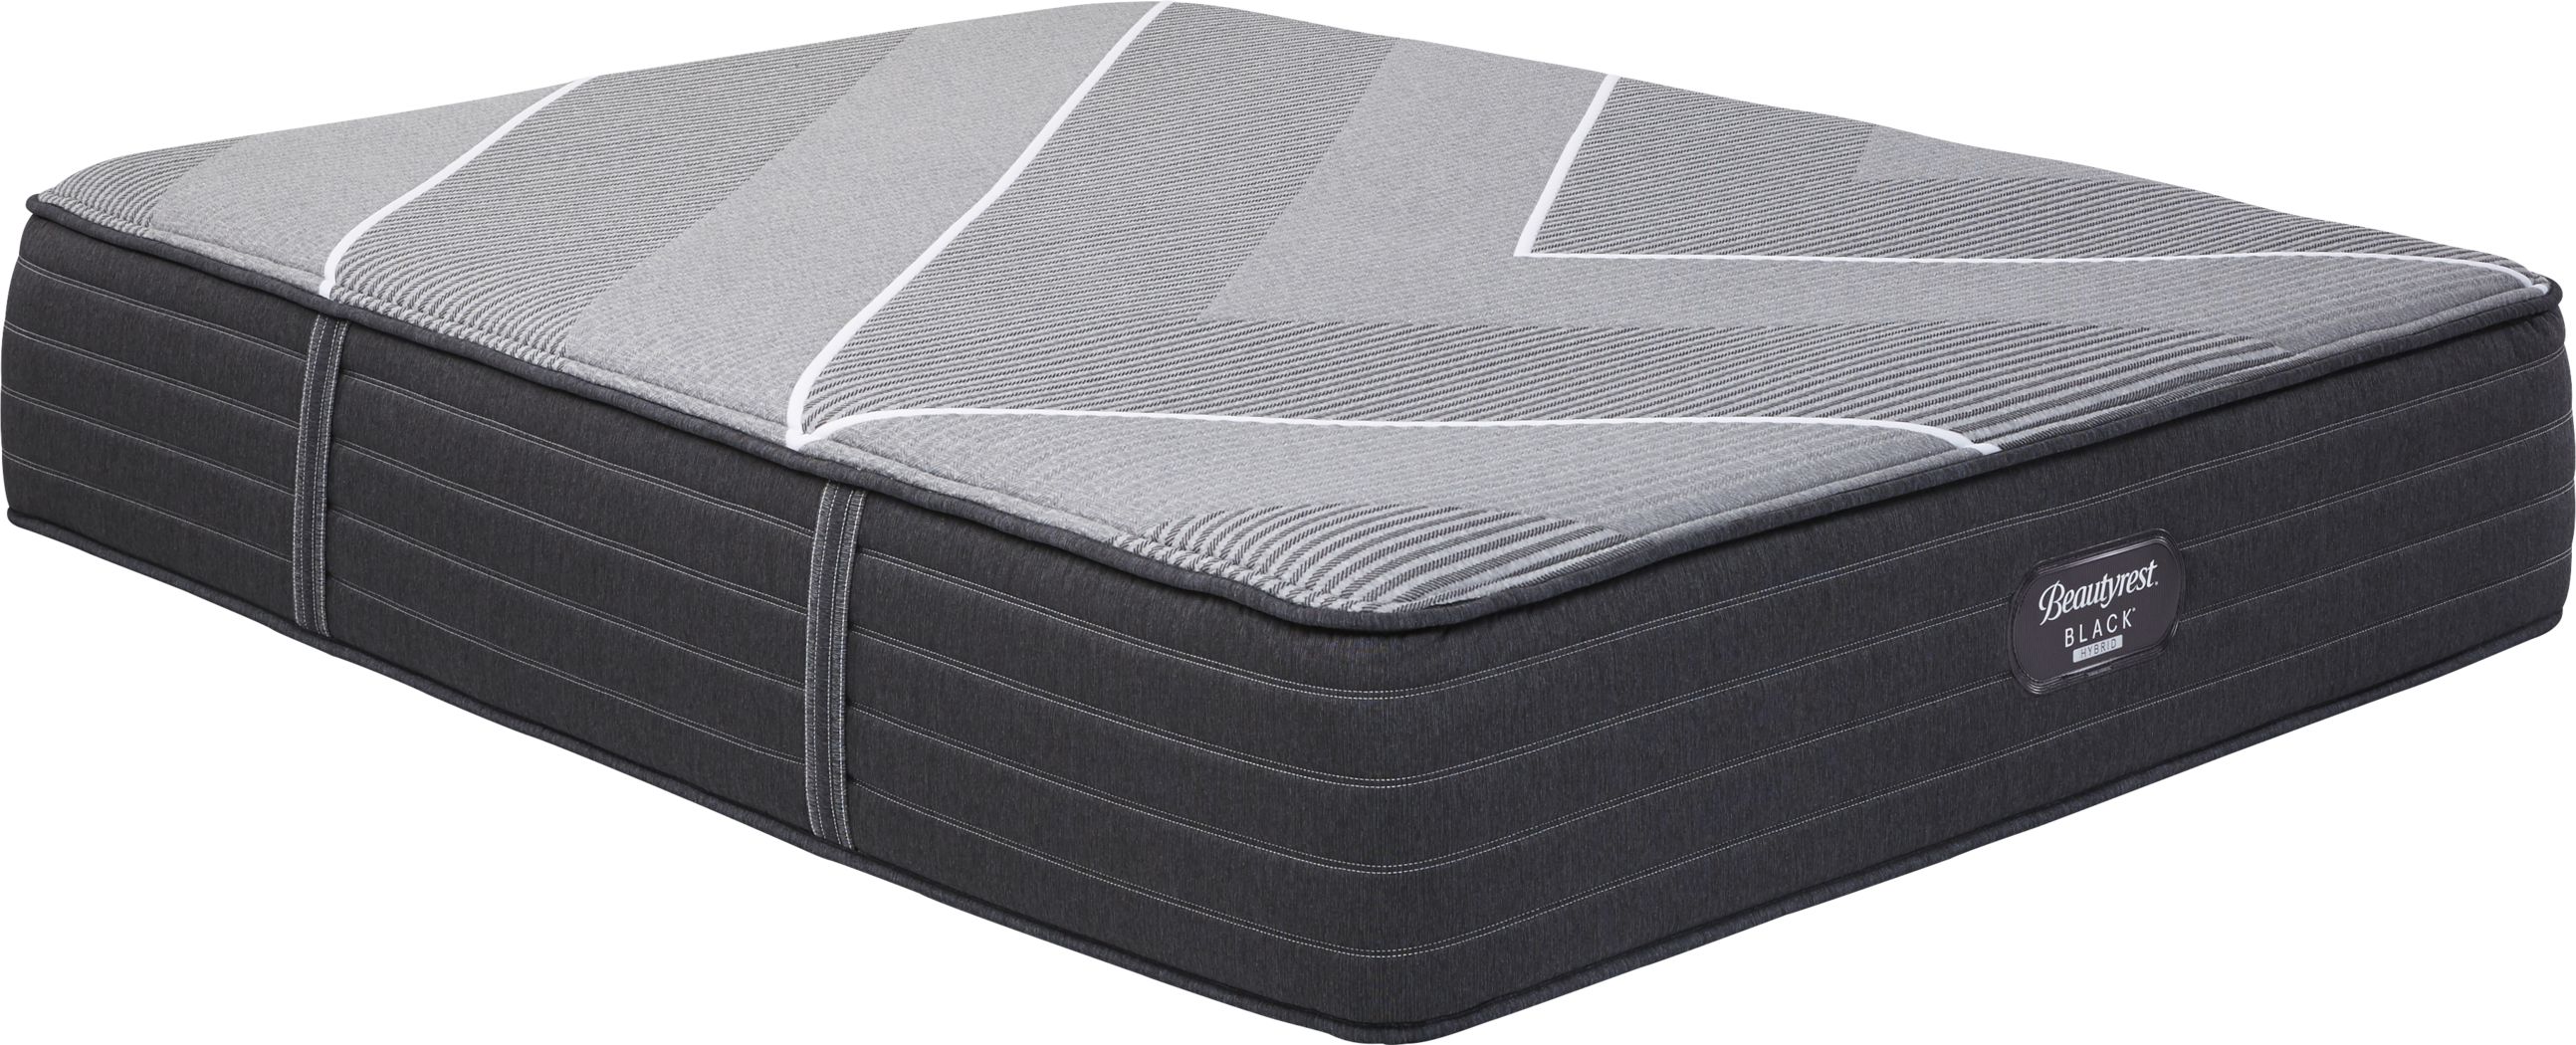 x class plush black hybrid mattress